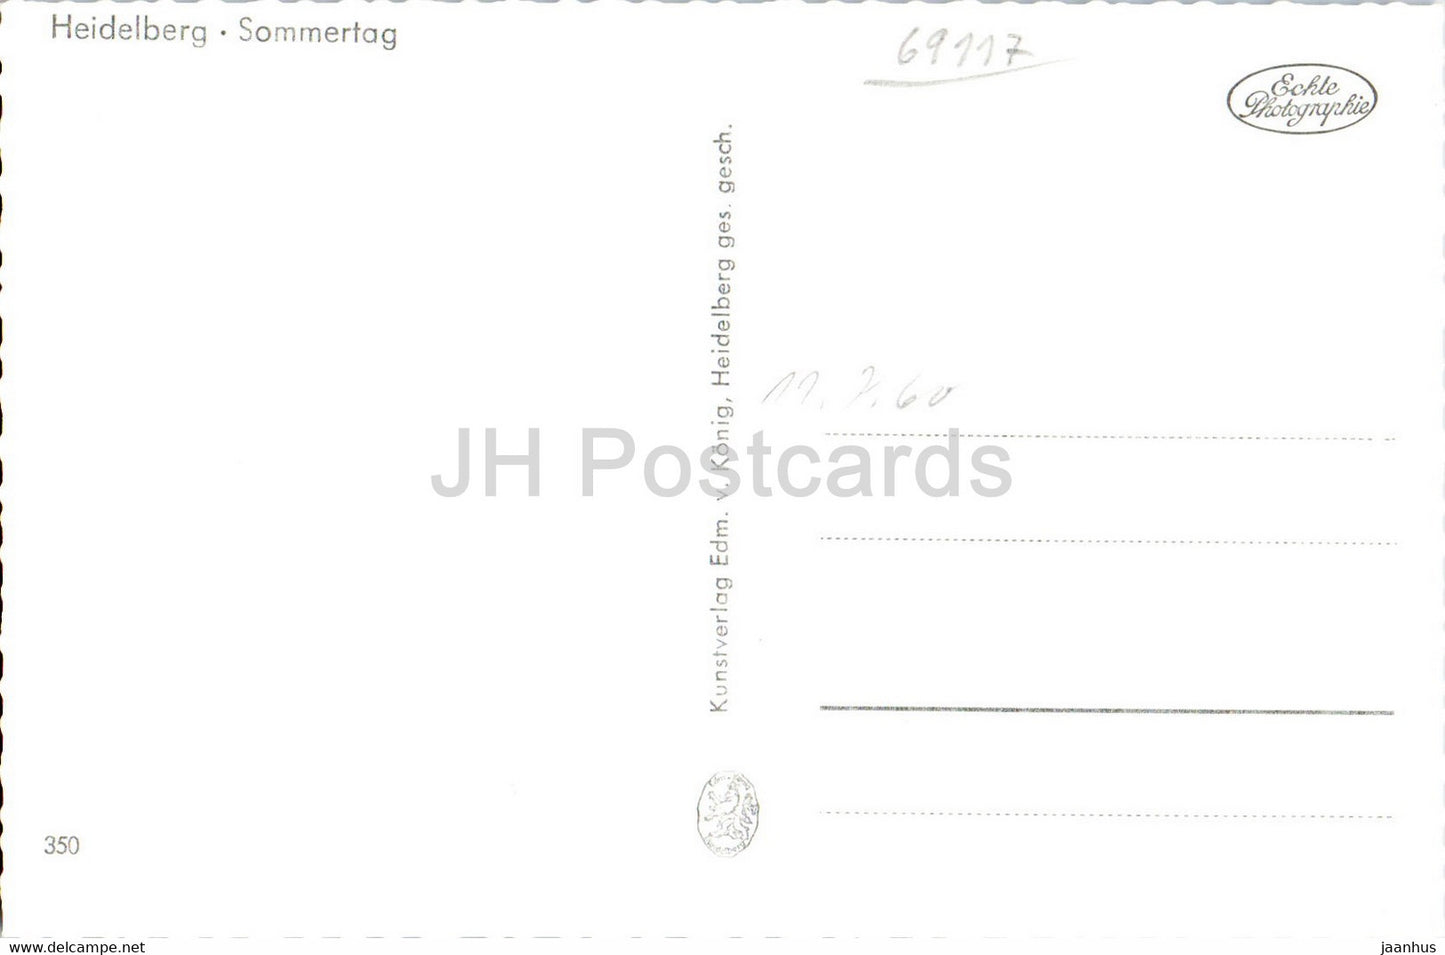 Heidelberg - Sommertag - navire - carte postale ancienne - Allemagne - inutilisé